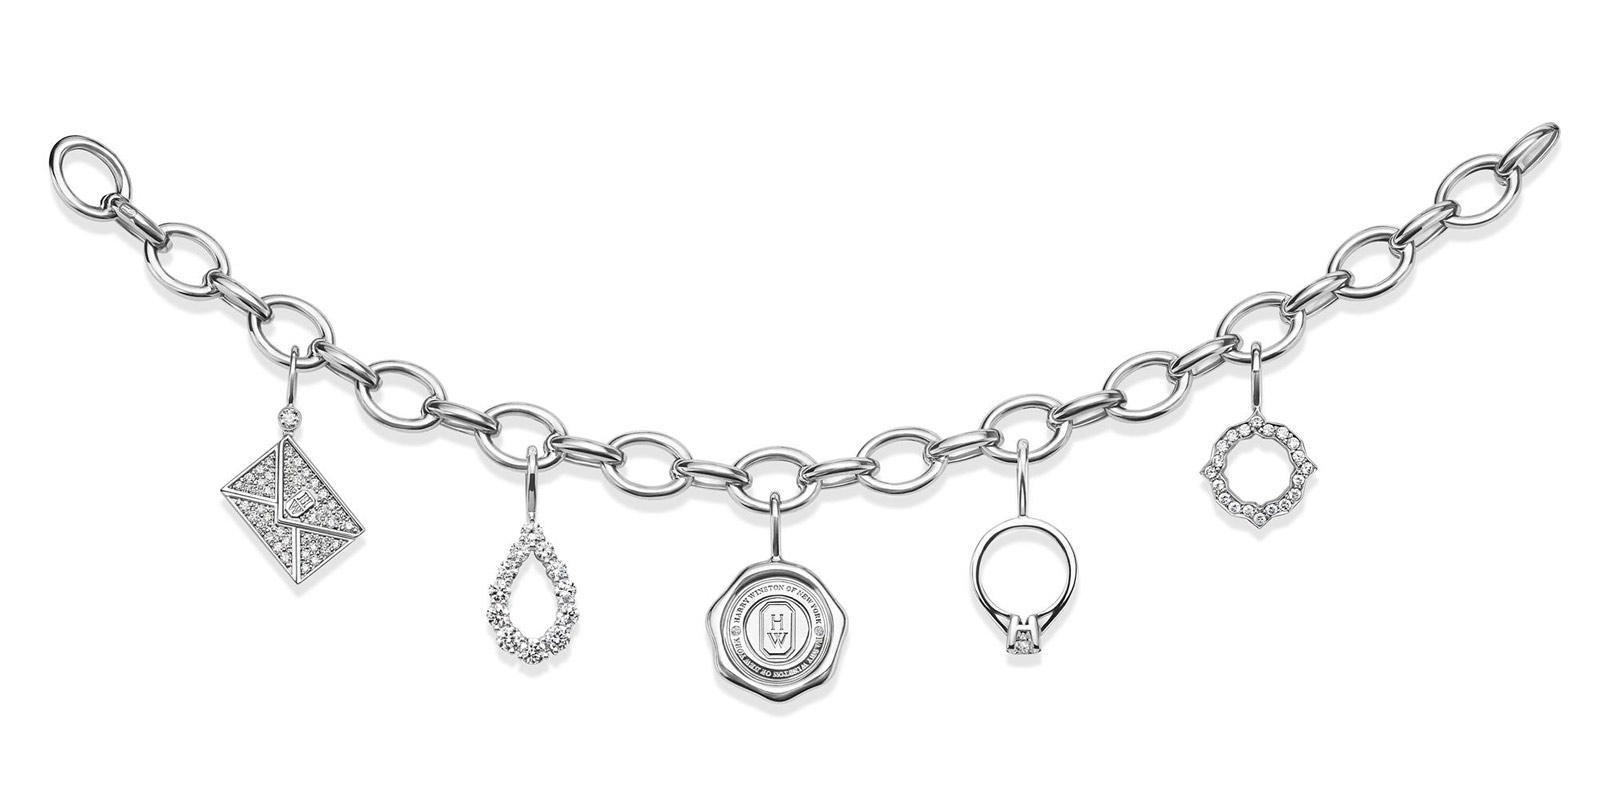 Harry Winston charm bracelet in platinum and diamonds